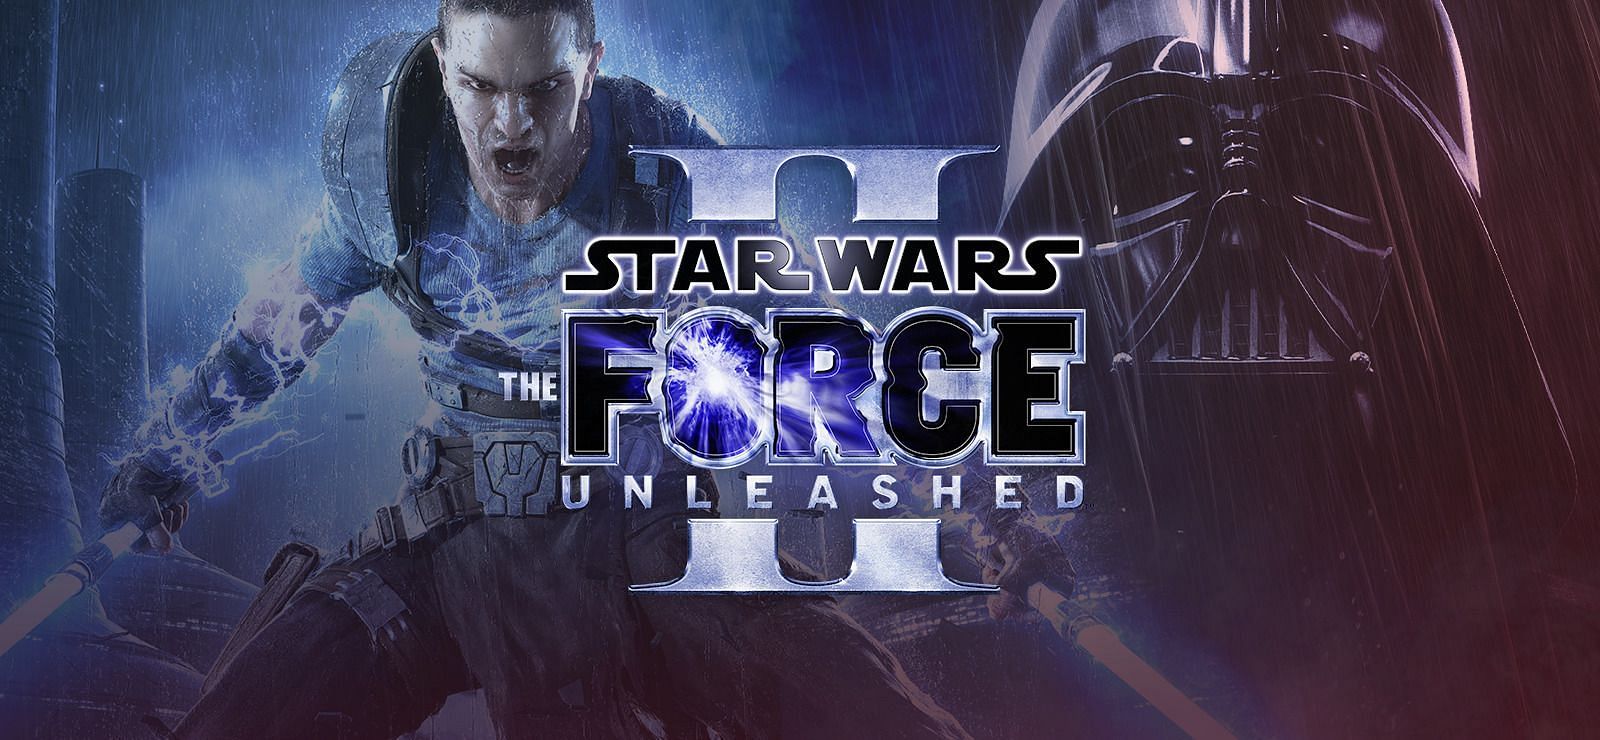 Star Wars: The Force Unleashed II (Image via GOG.com)